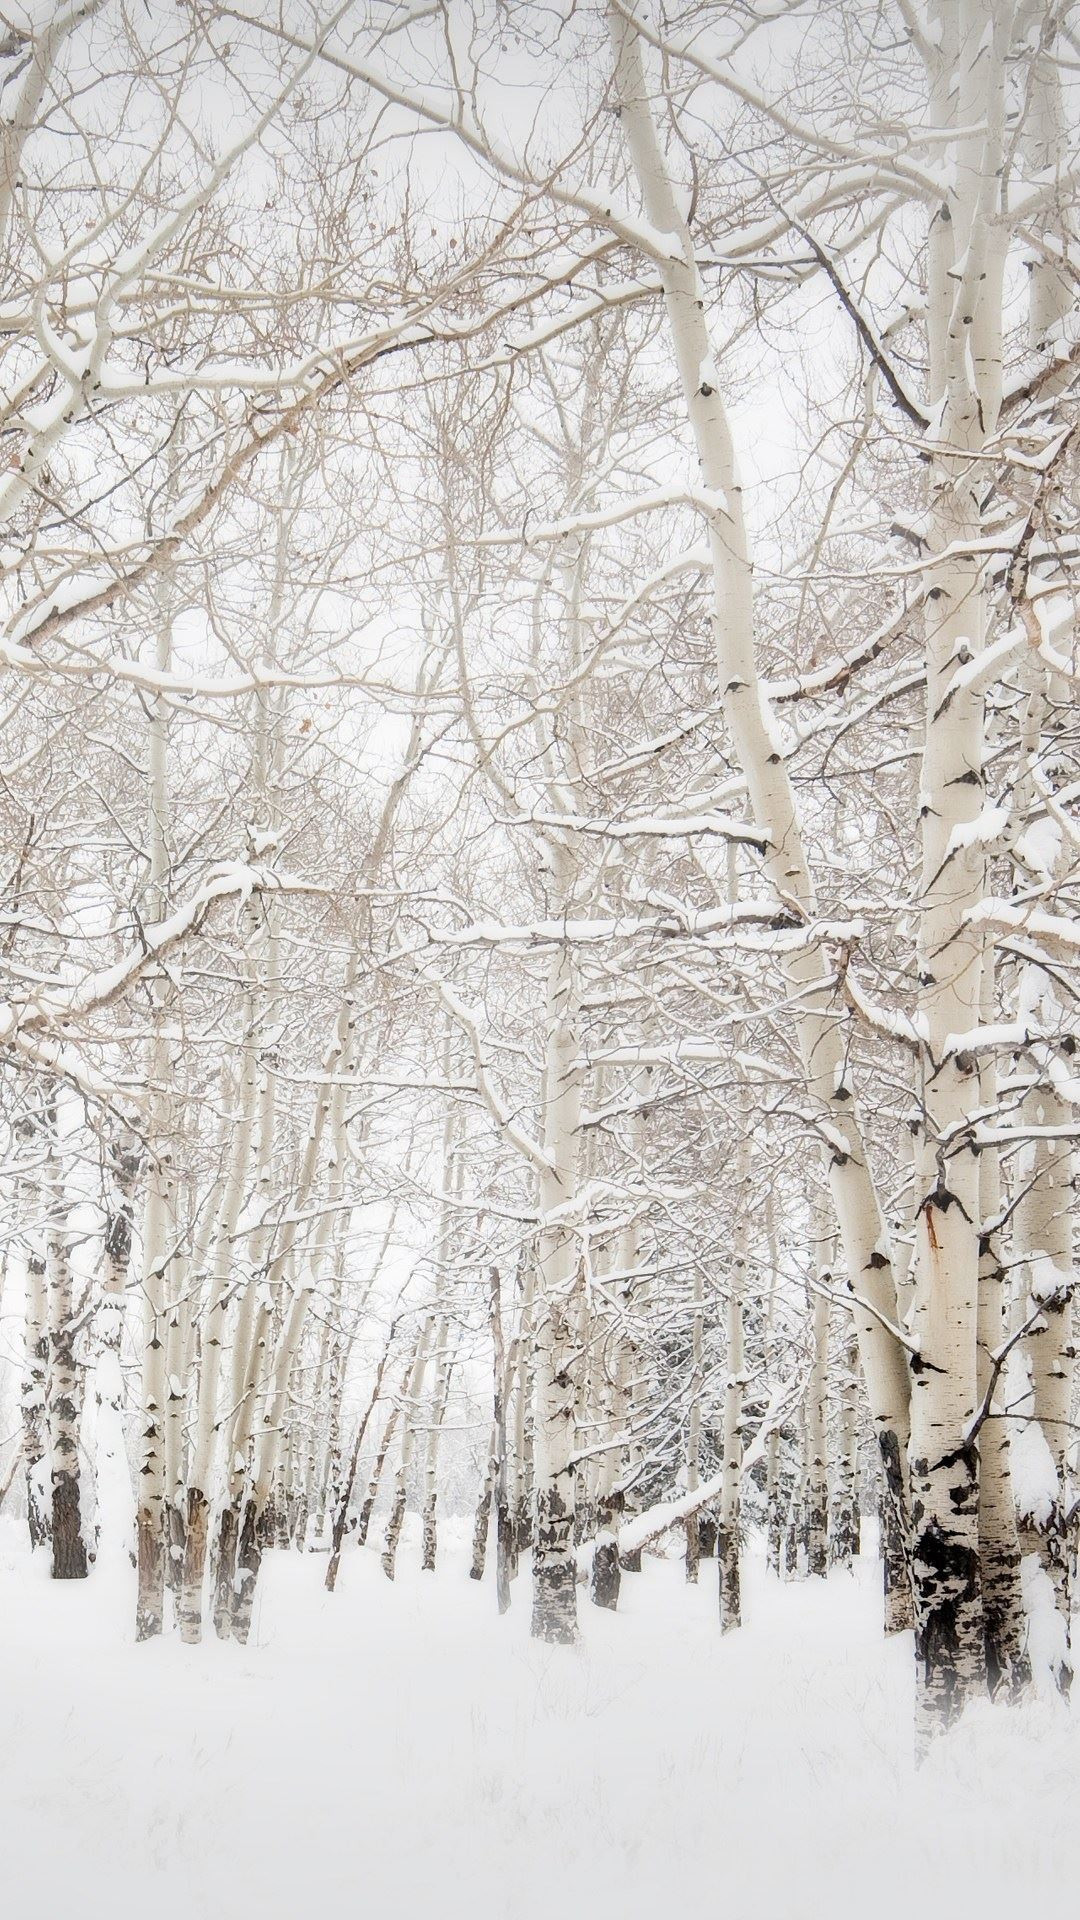 1080x1920 Birch Trees Winter Landscape iPhone 6 wallpaper